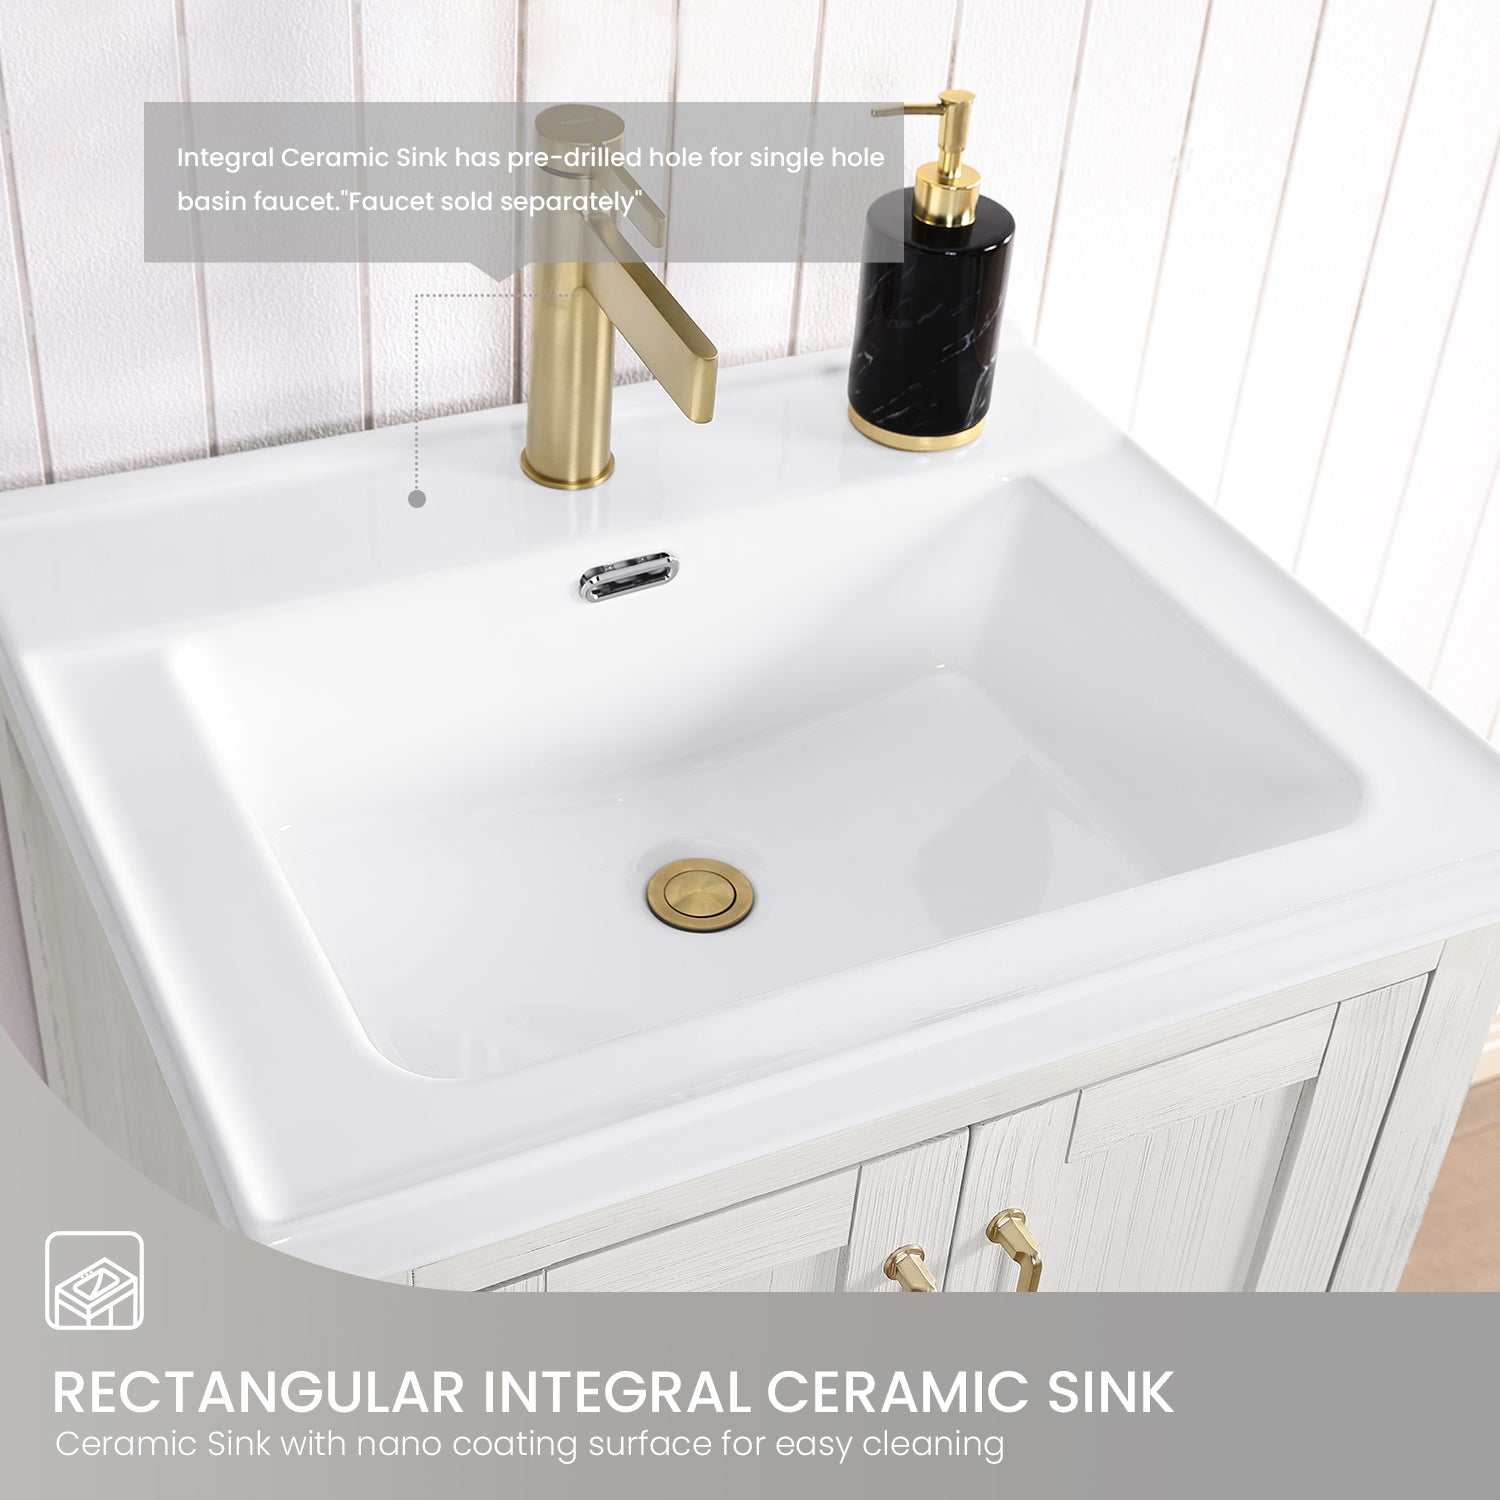 Gela 24" Single Sink Bath Vanity in Fir Wood White with Drop-In White Ceramic Basin